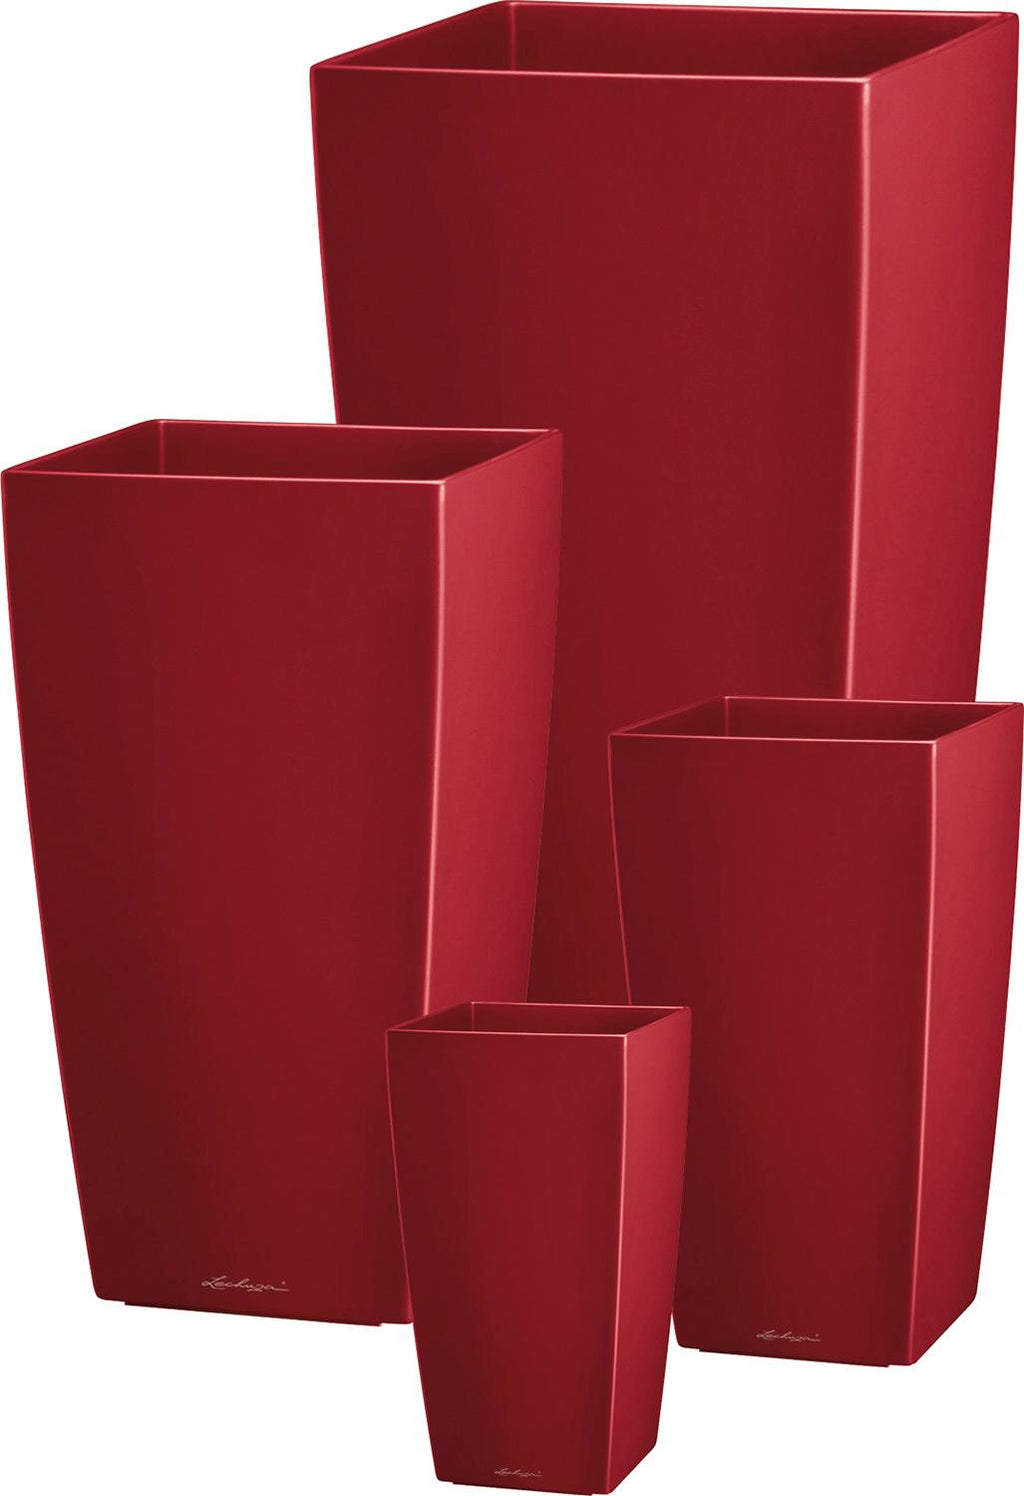 CUBICO planter, 22x22/41 cm, scarlet red